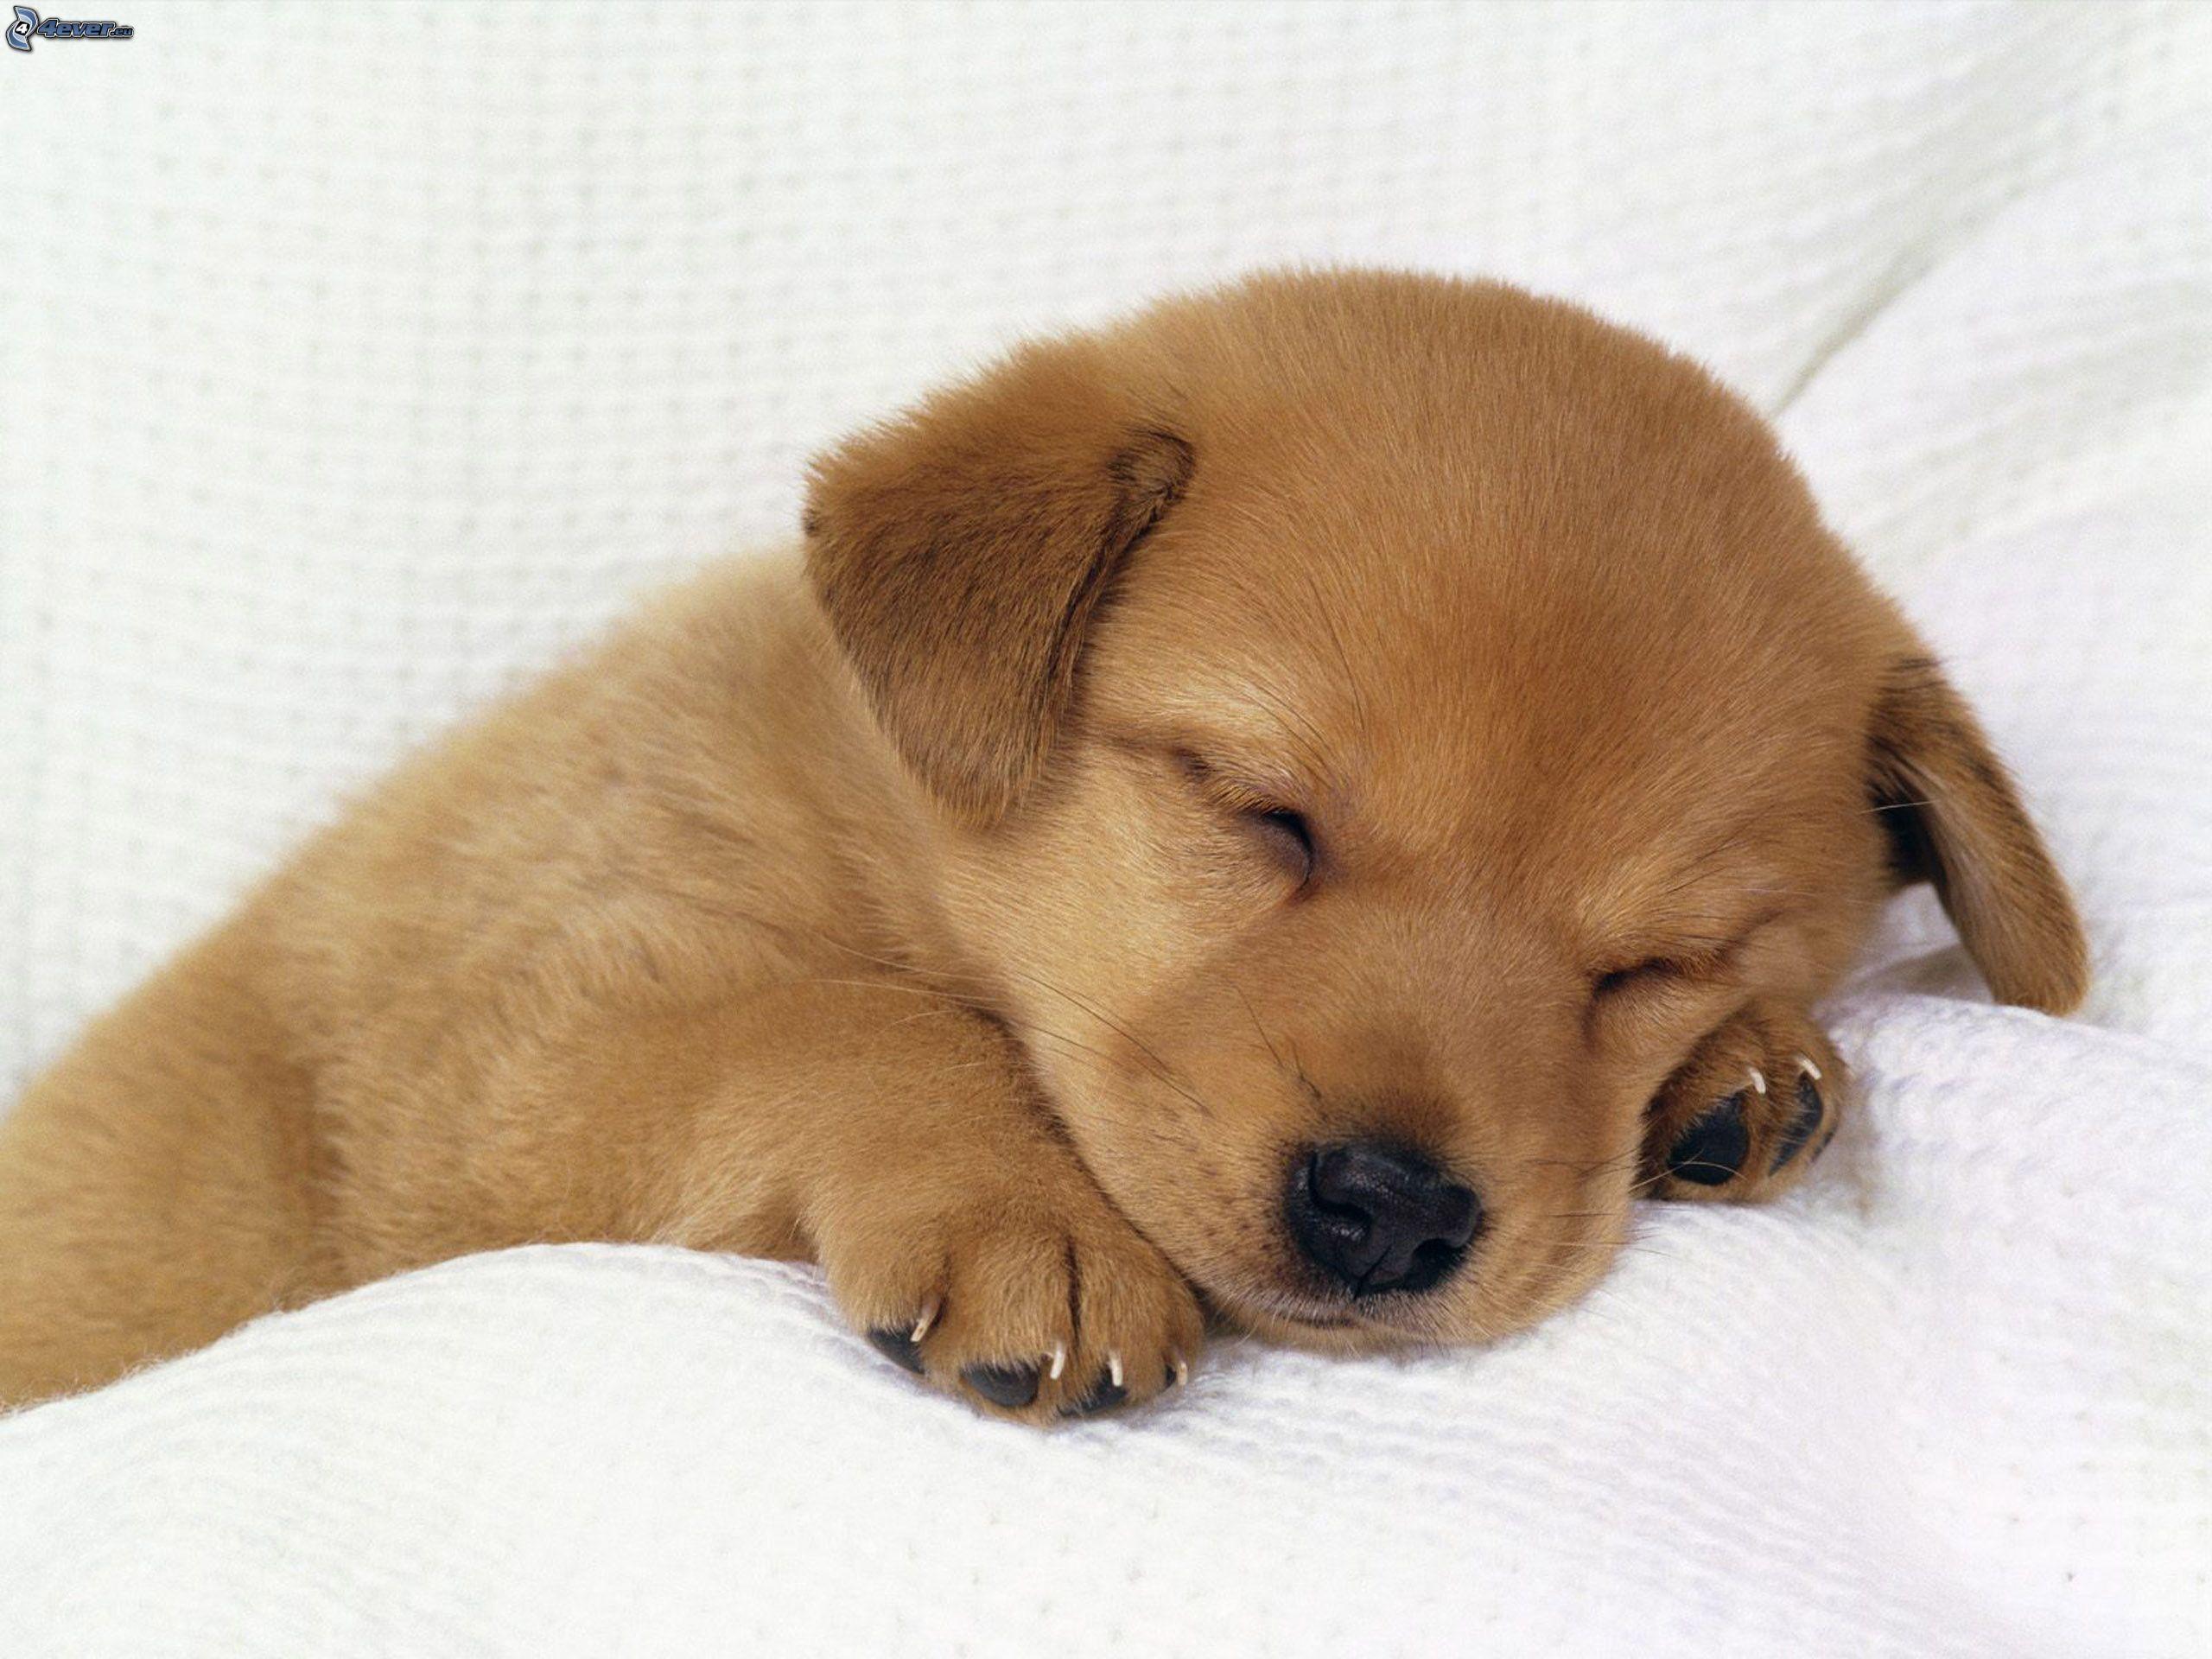 Puppy Sleeping Wallpaper